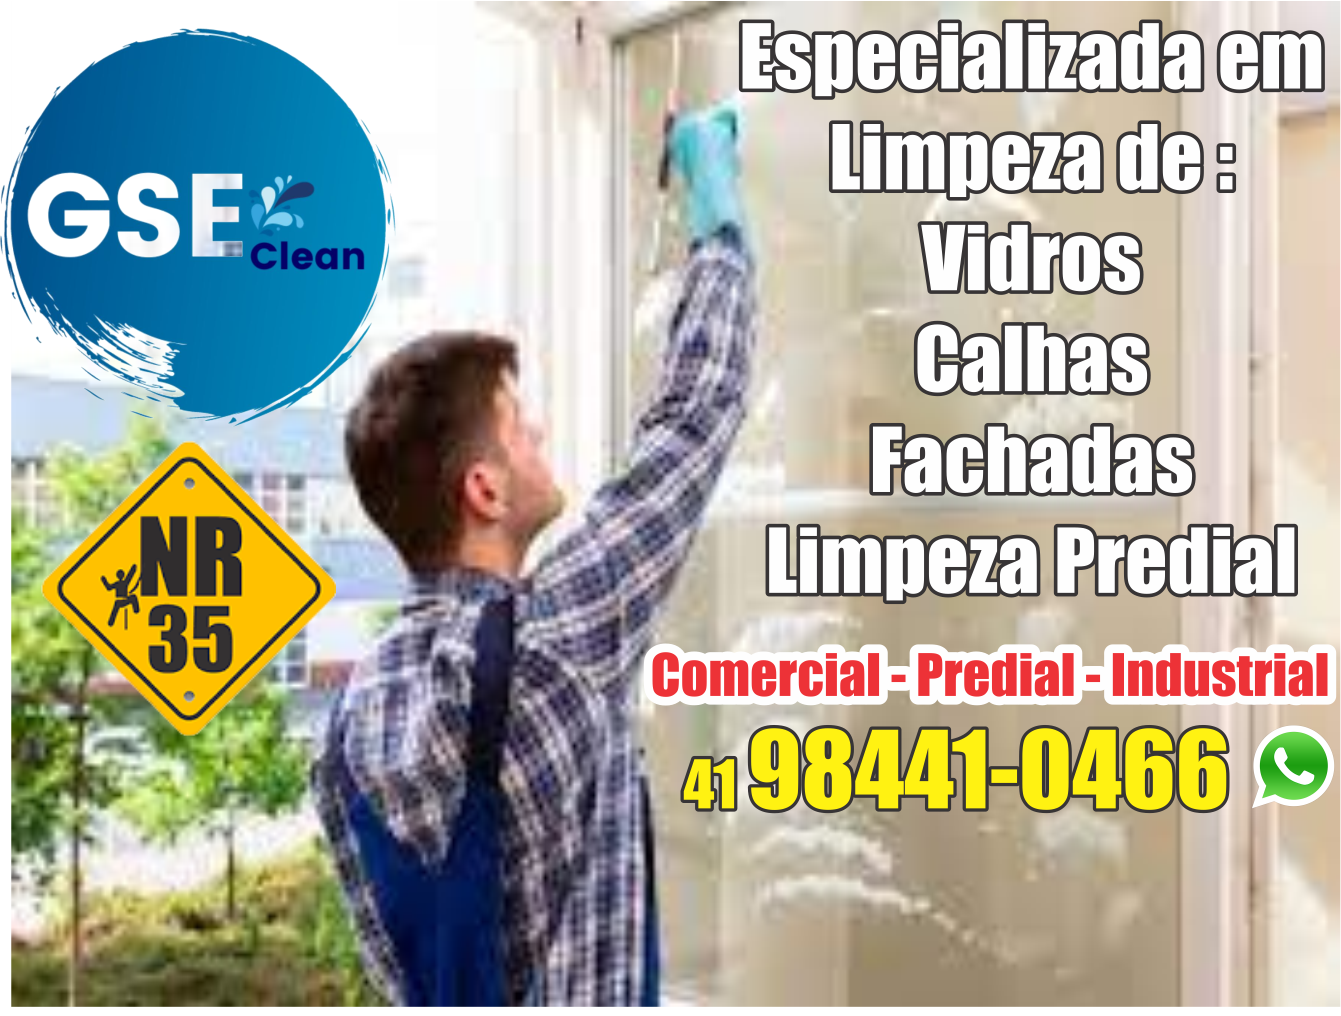 GSE Clean Especializada em Limpeza      Fones: (41)98441-0466 /